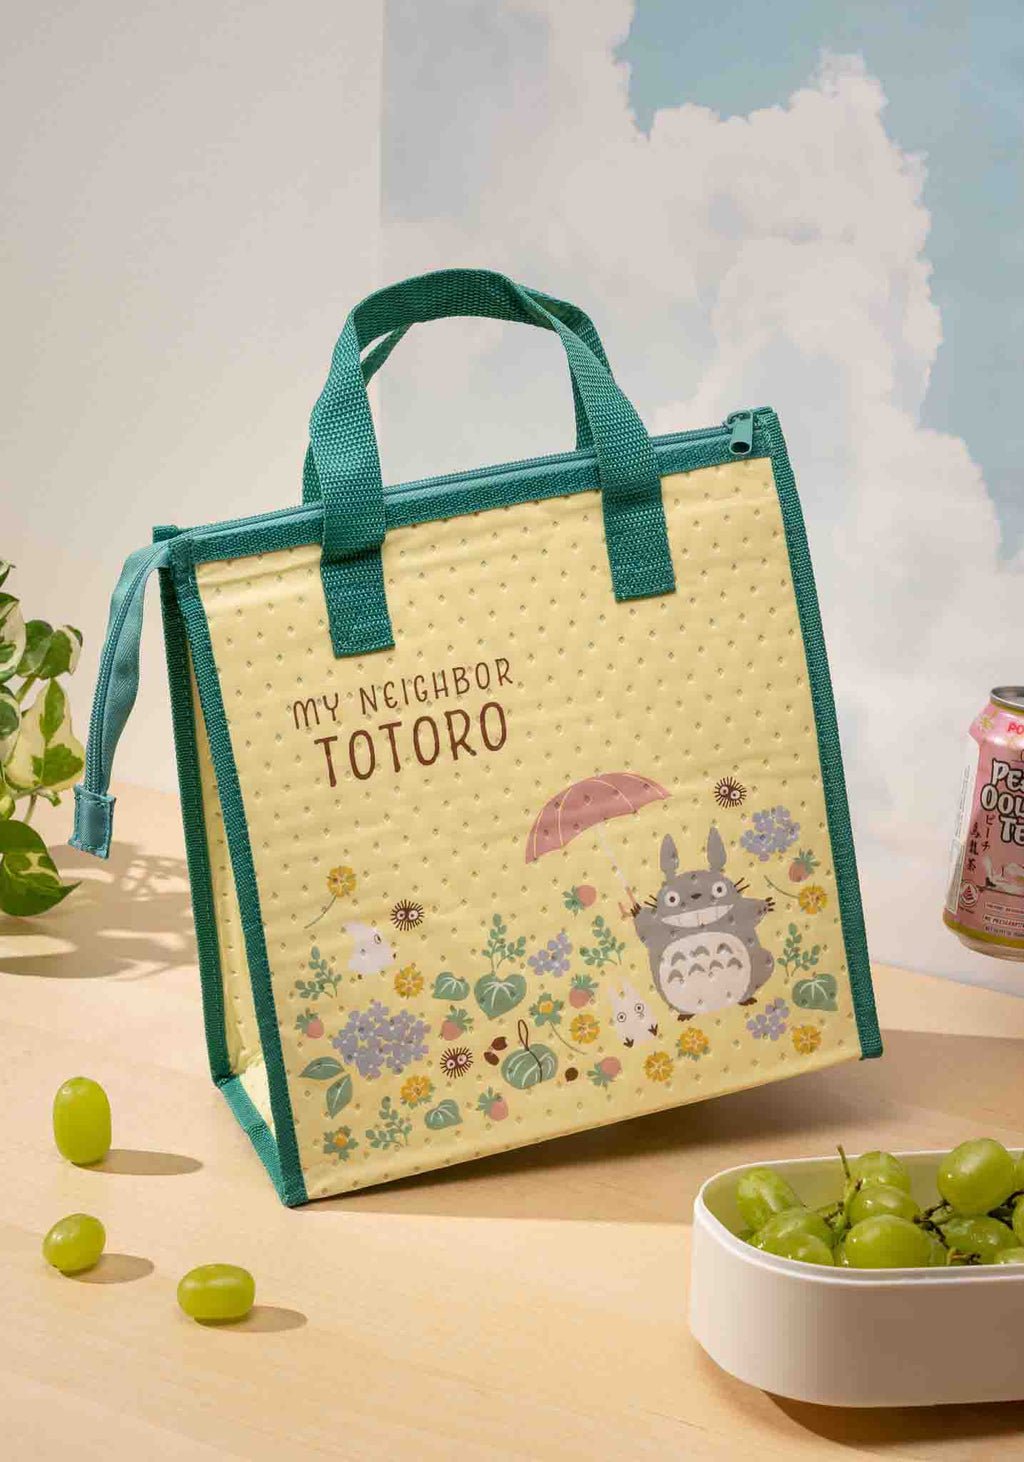 My Neighbor Totoro: Flower Field Insulated Lunch Bag